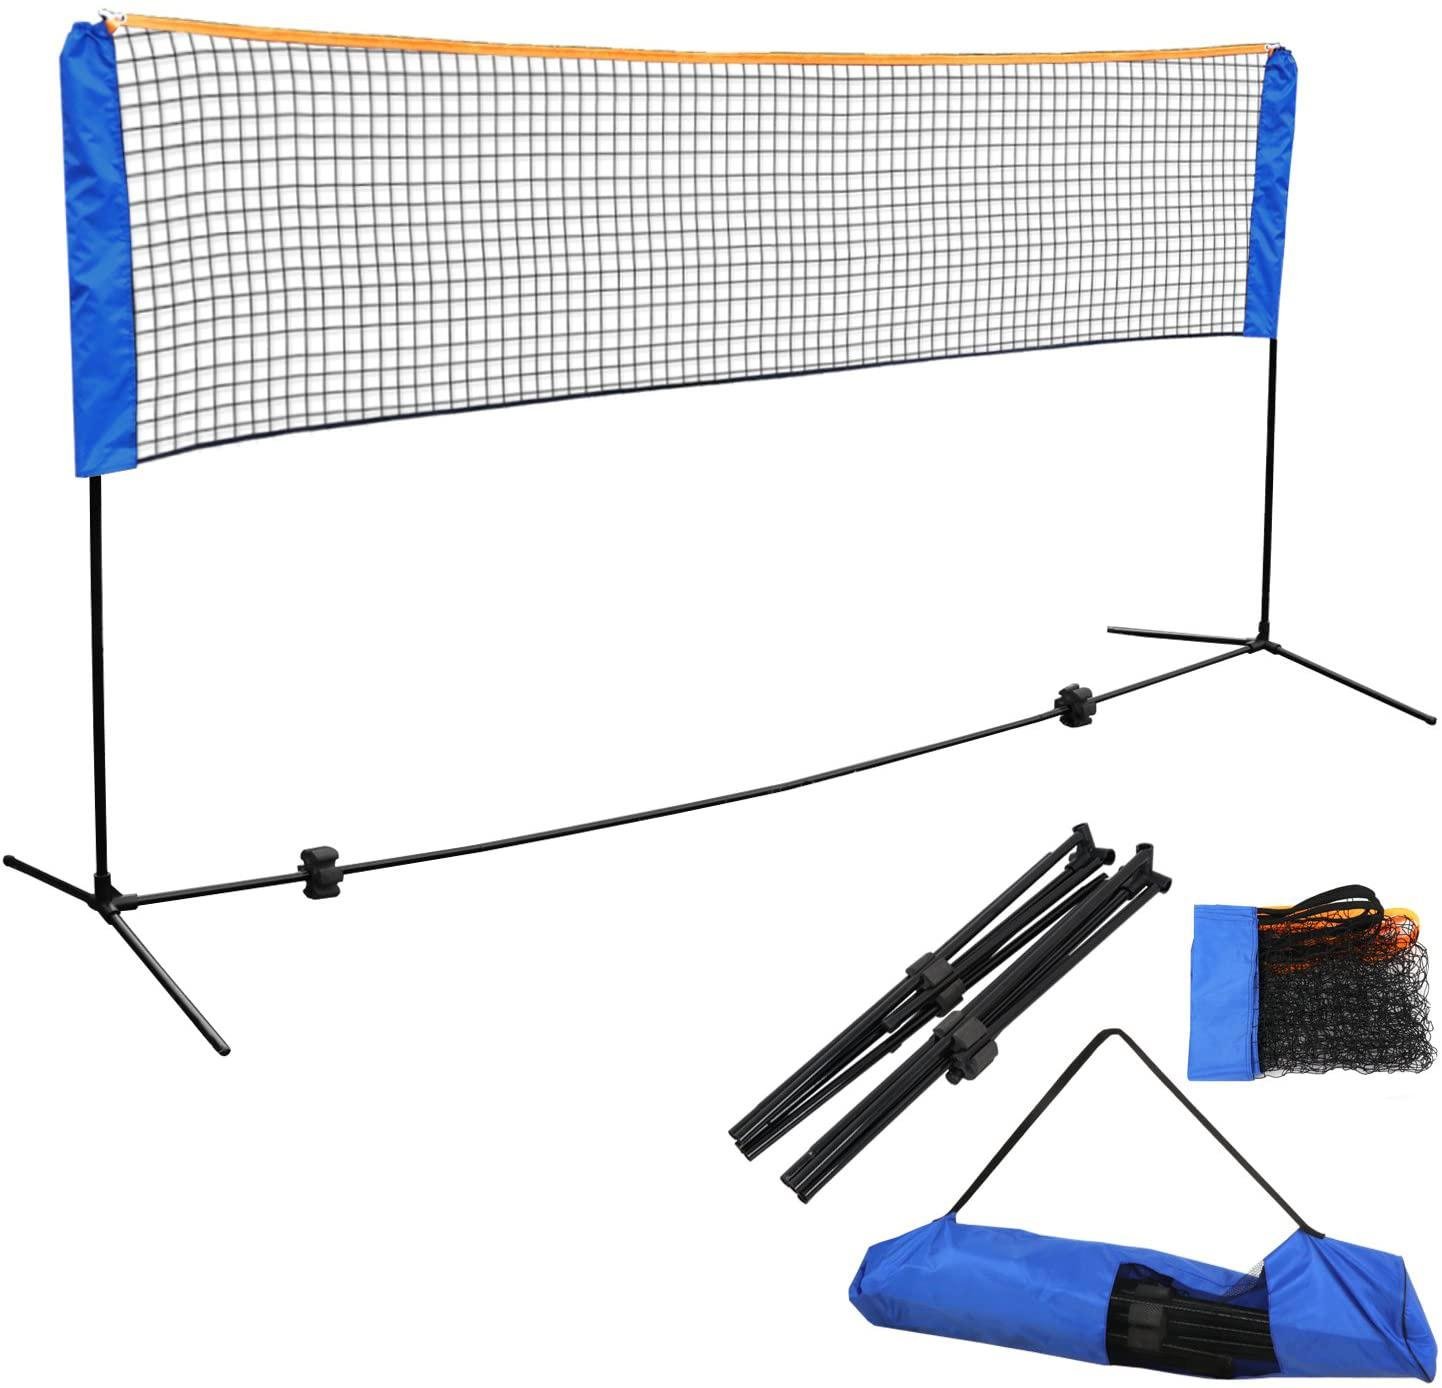 Shawview badminton net outdoor sports game 4